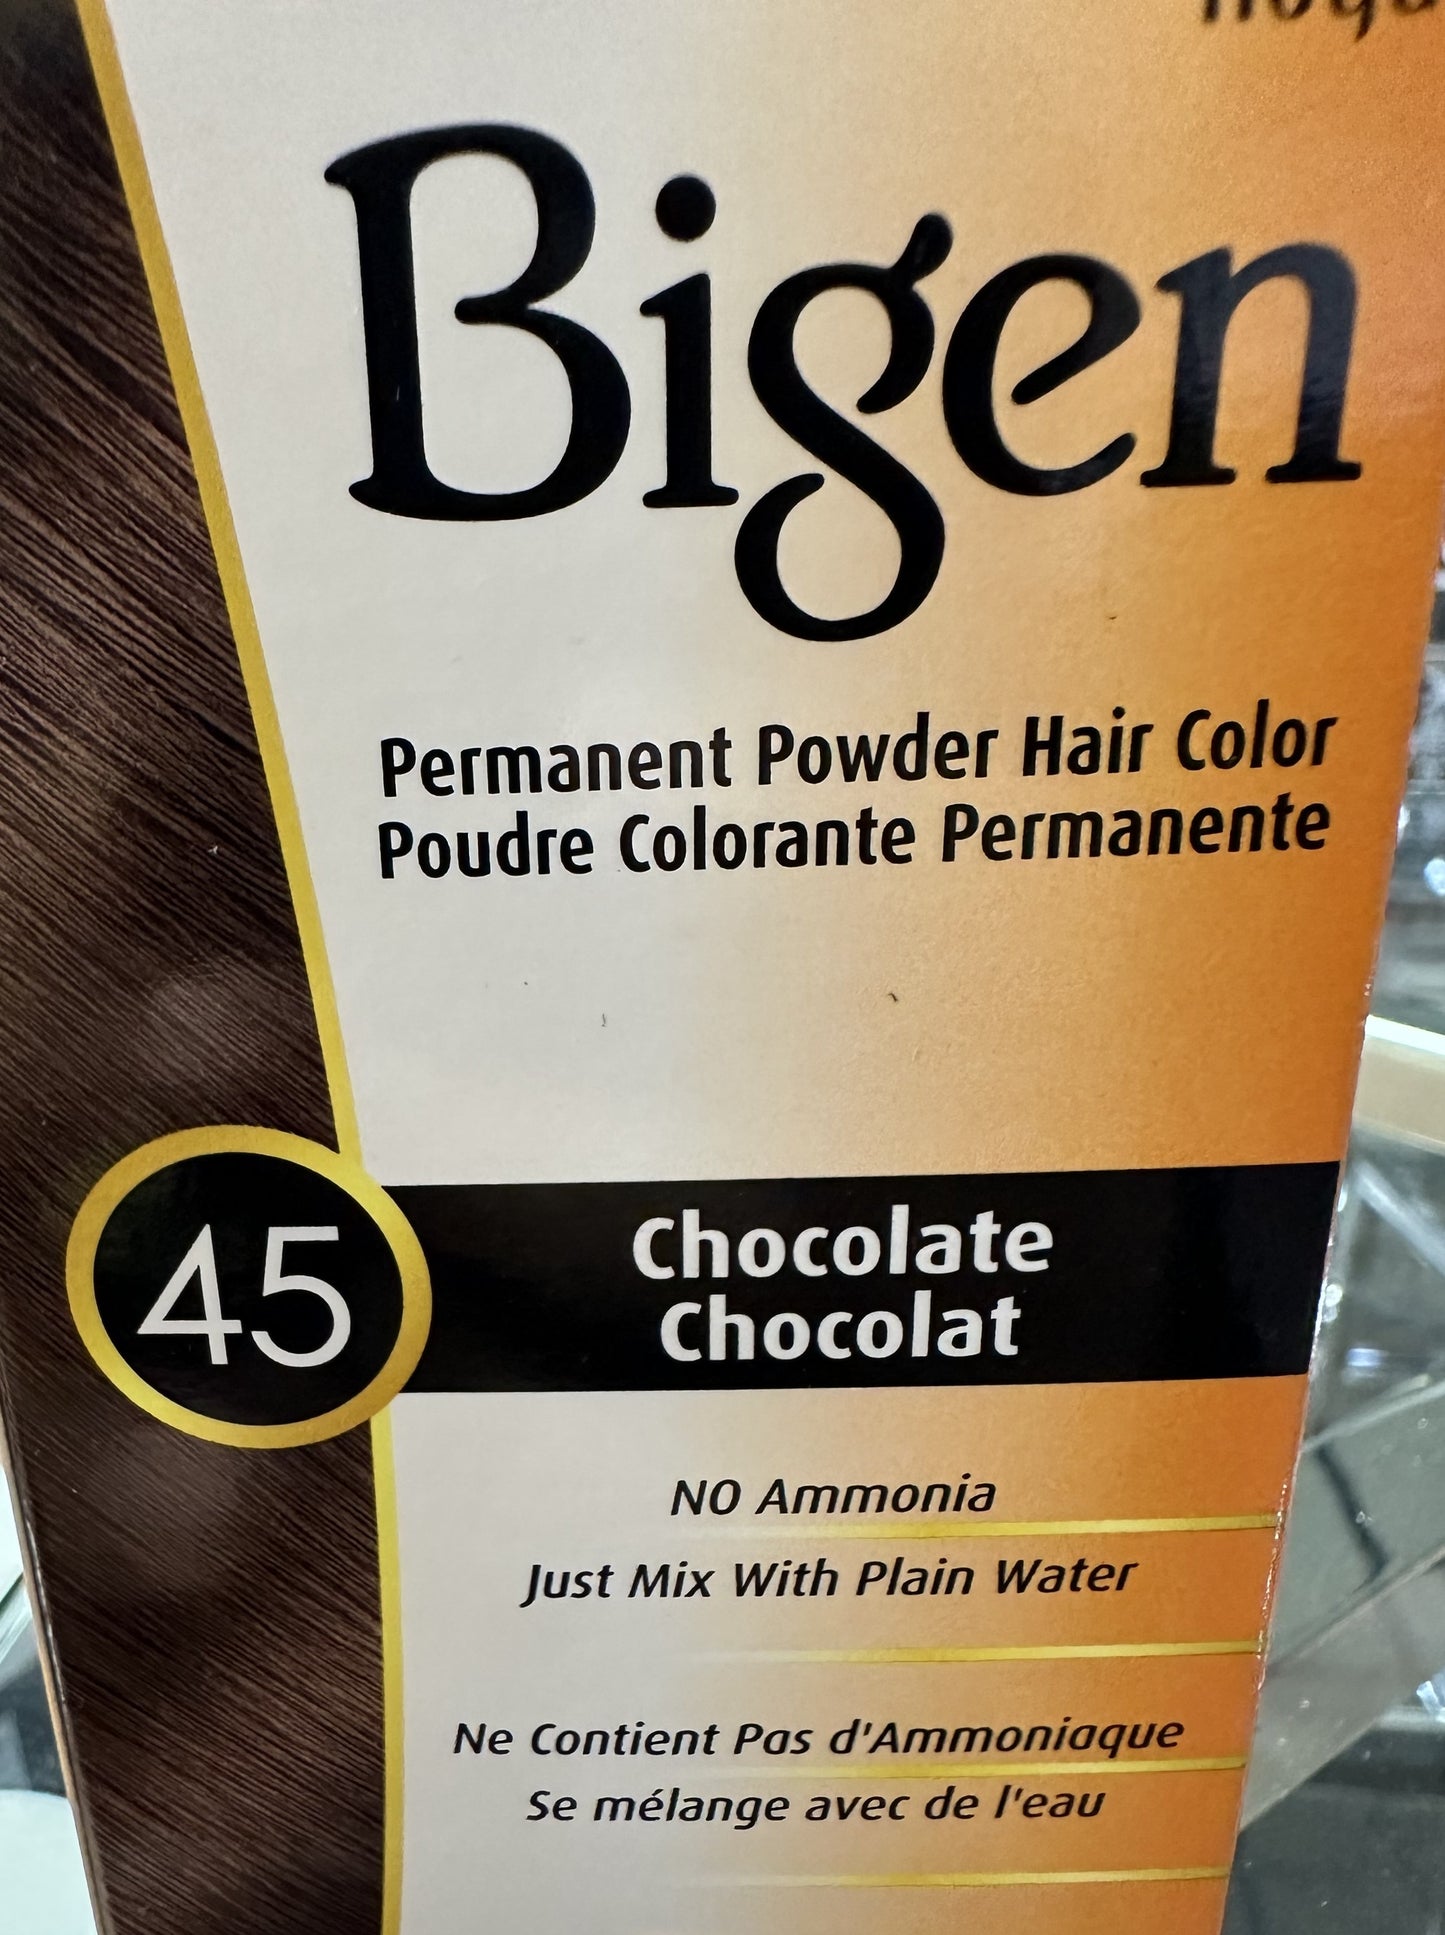 BIGEN PERMANENT POWDER HAIR COLOR (CHOCOLATE)